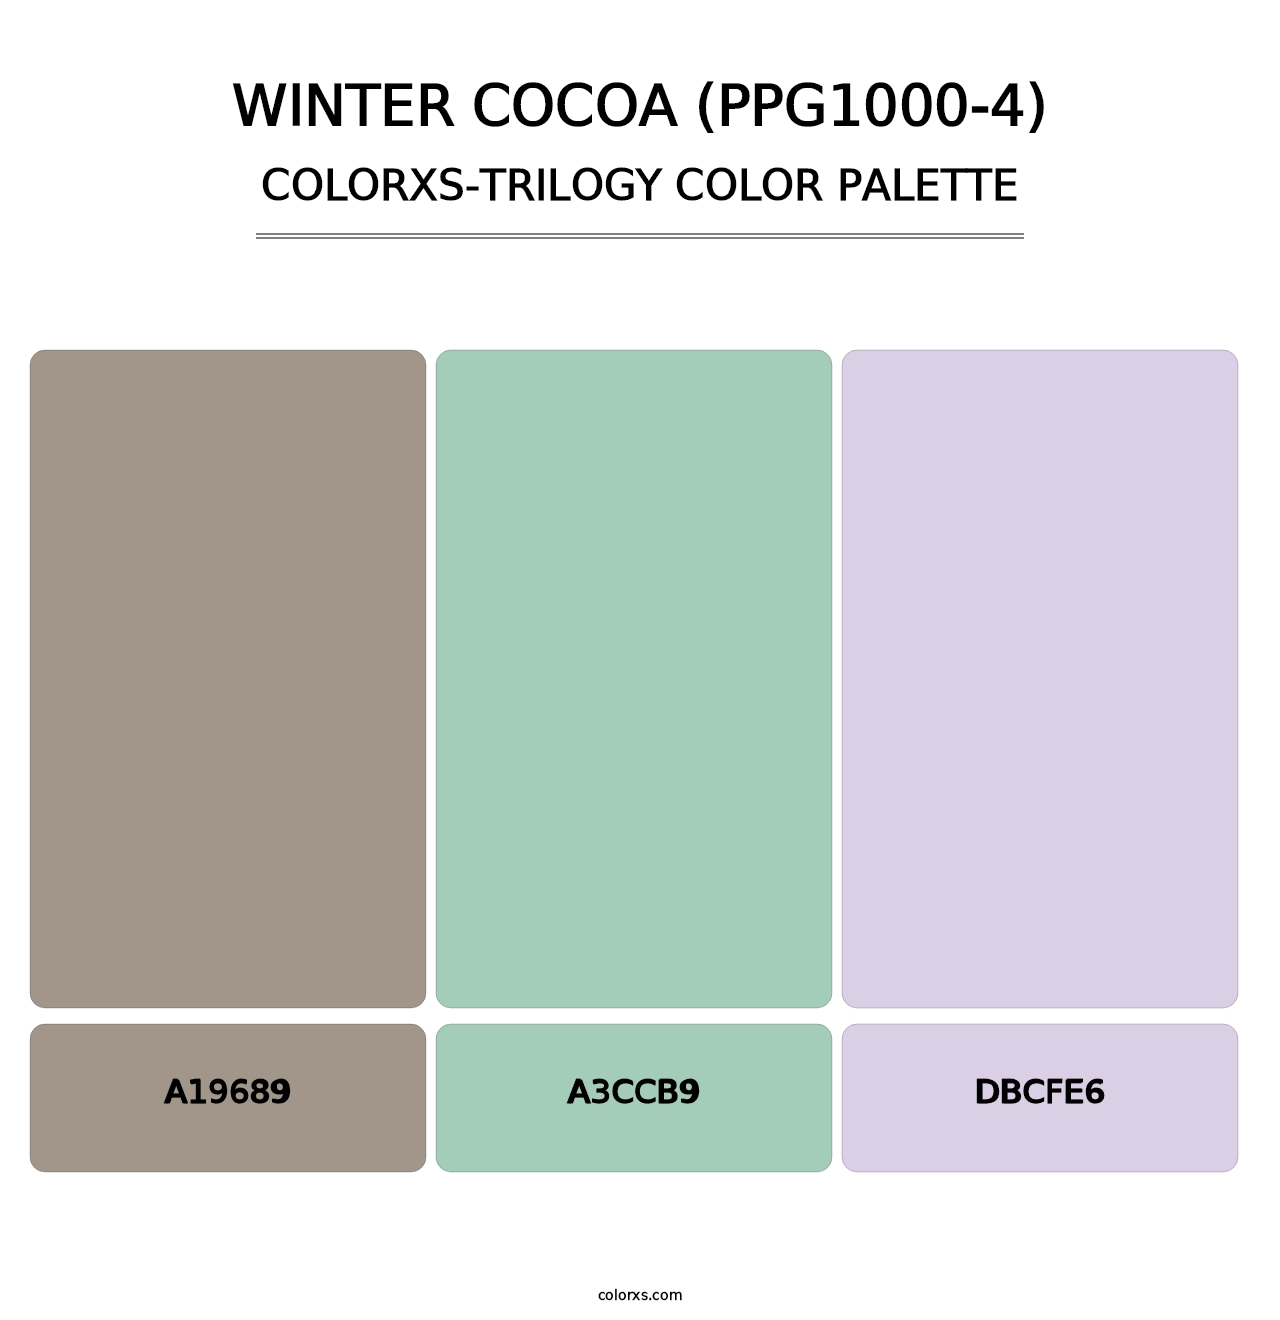 Winter Cocoa (PPG1000-4) - Colorxs Trilogy Palette